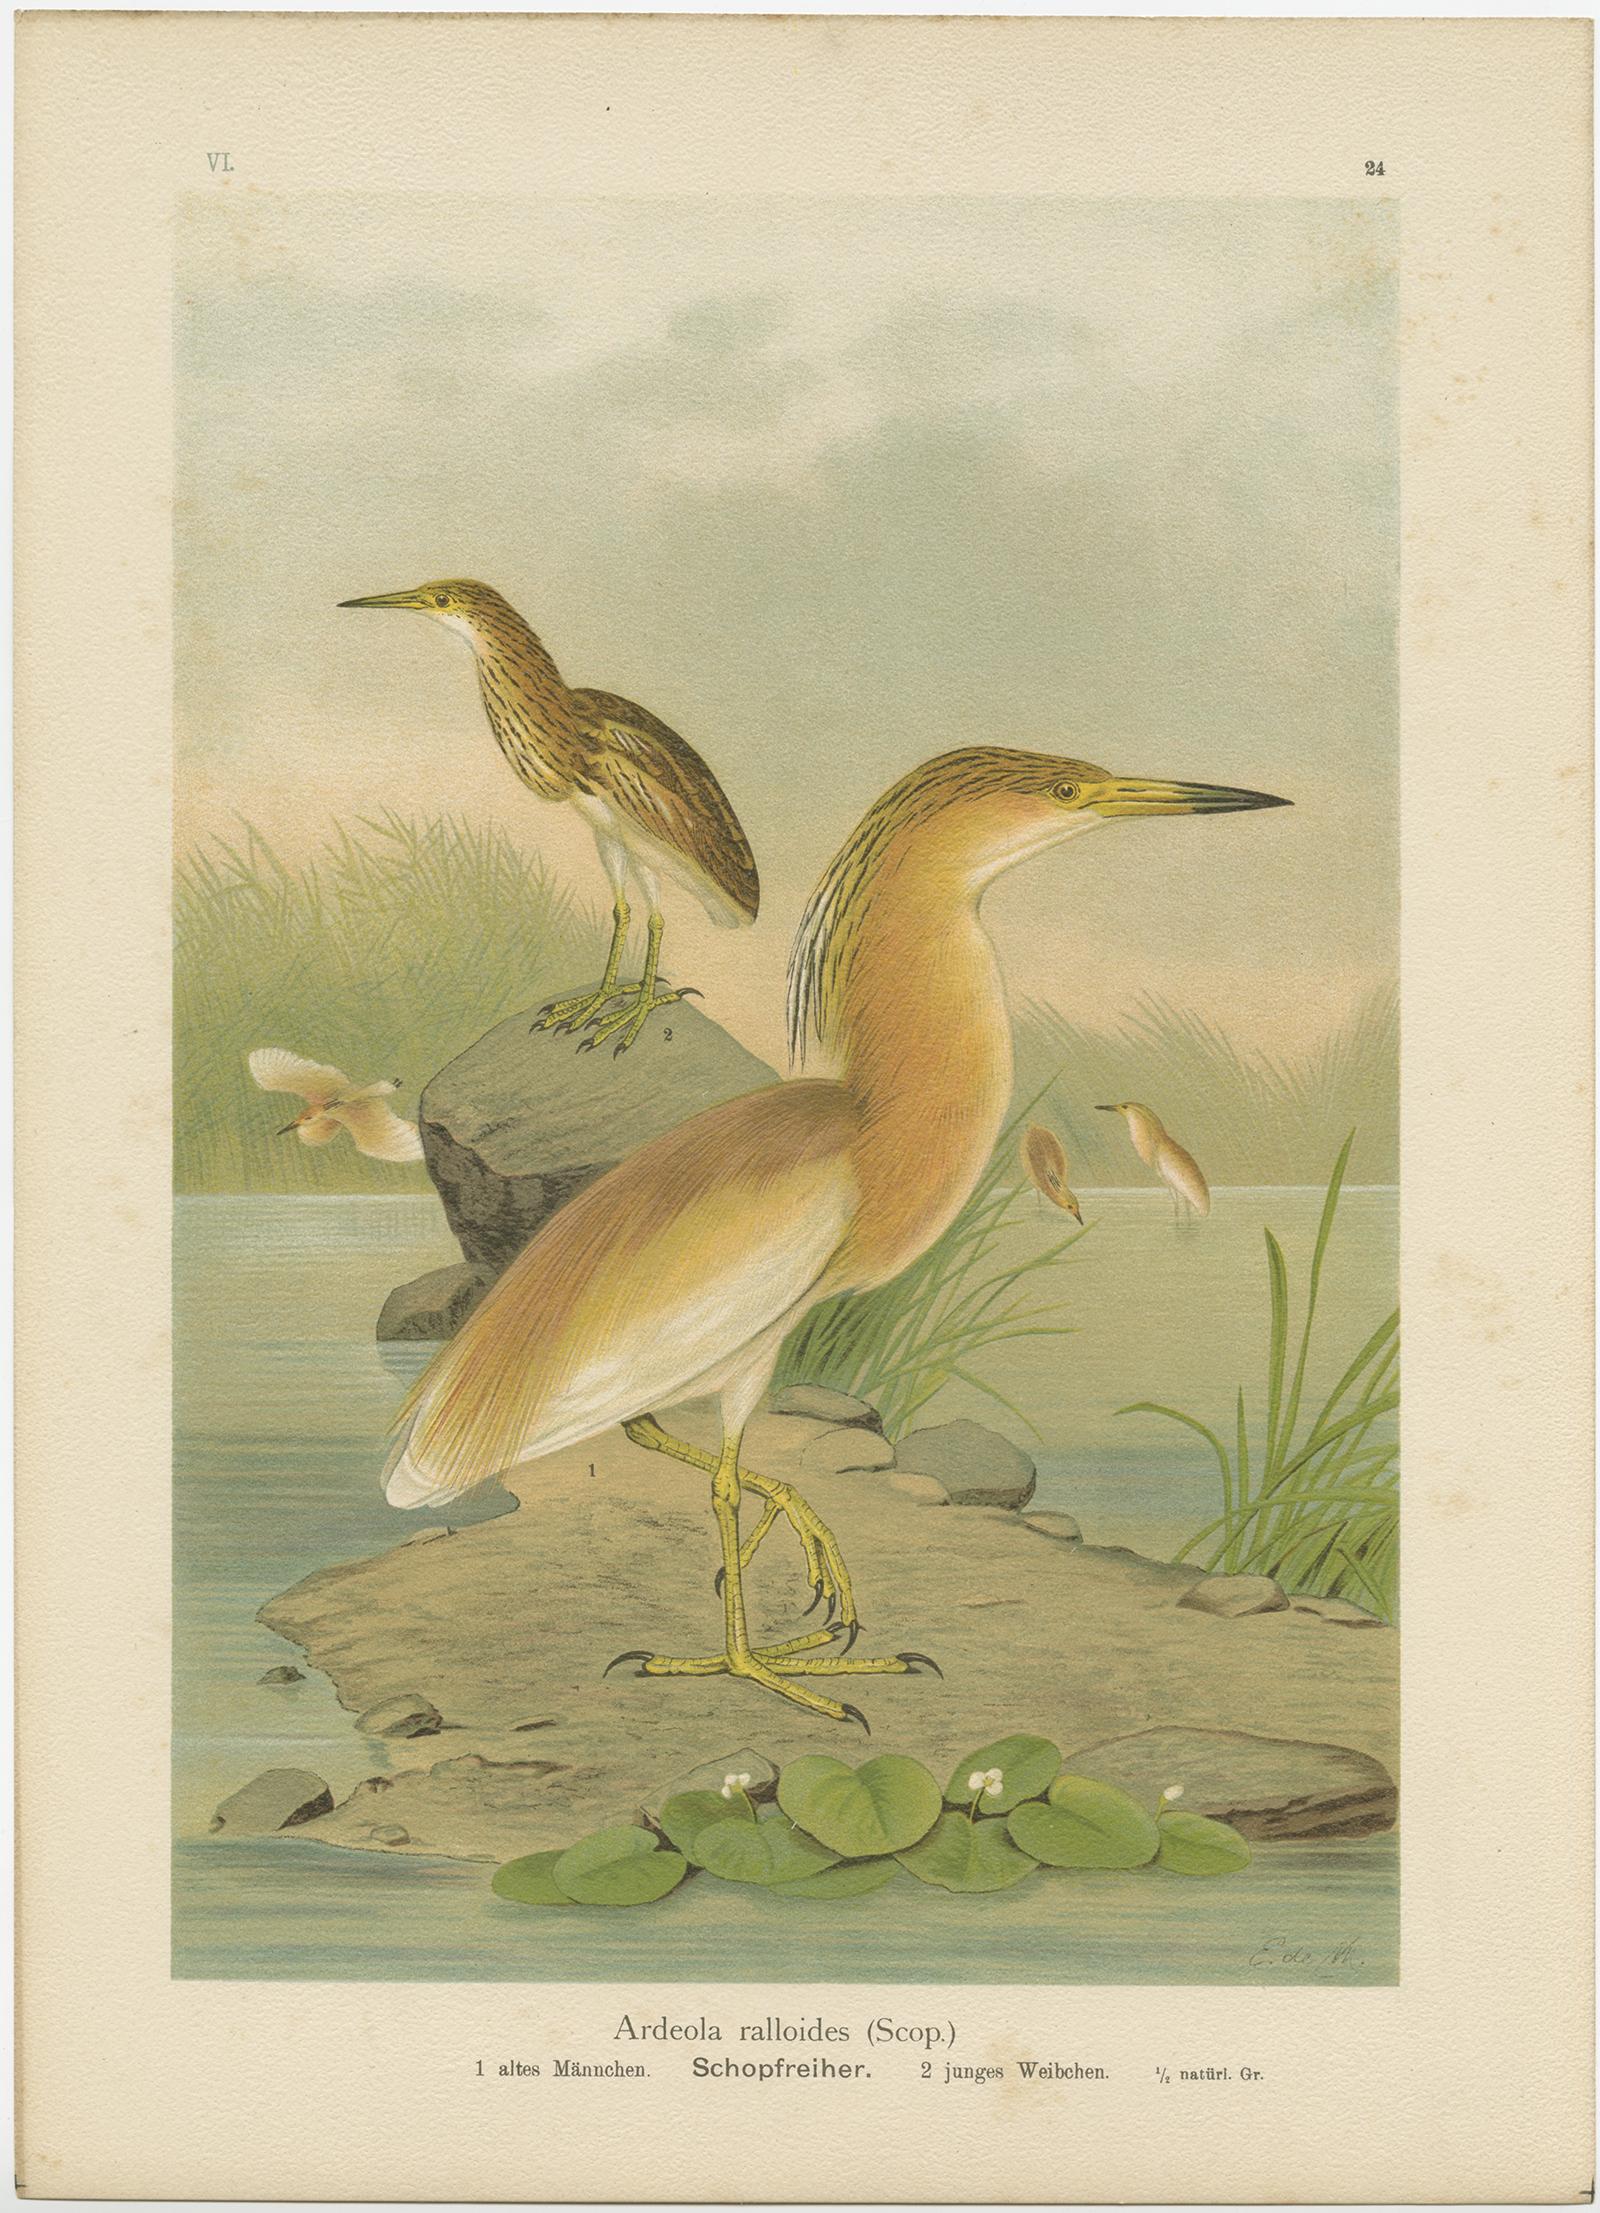 Antique bird print titled 'Ardeola ralloides - Schopfreiher'. Chromolithograph of the Squacco Heron. This print originates from J.A. Naumann's 'Naturgeschichte der Vögel Mitteleuropas', published, circa 1895.